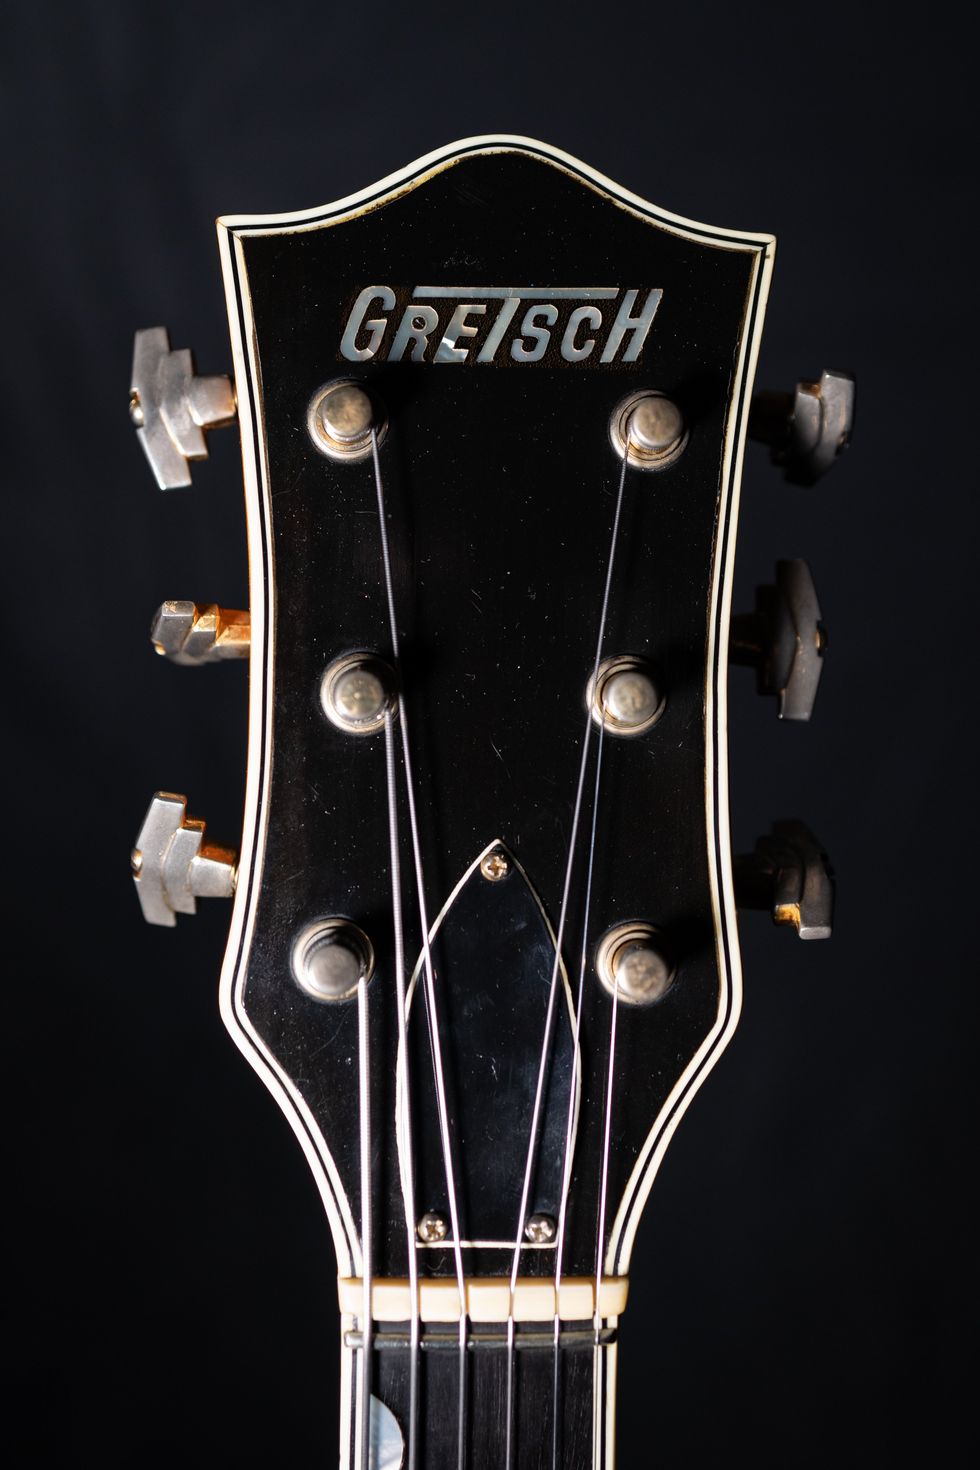 Gretsch guitar headstock